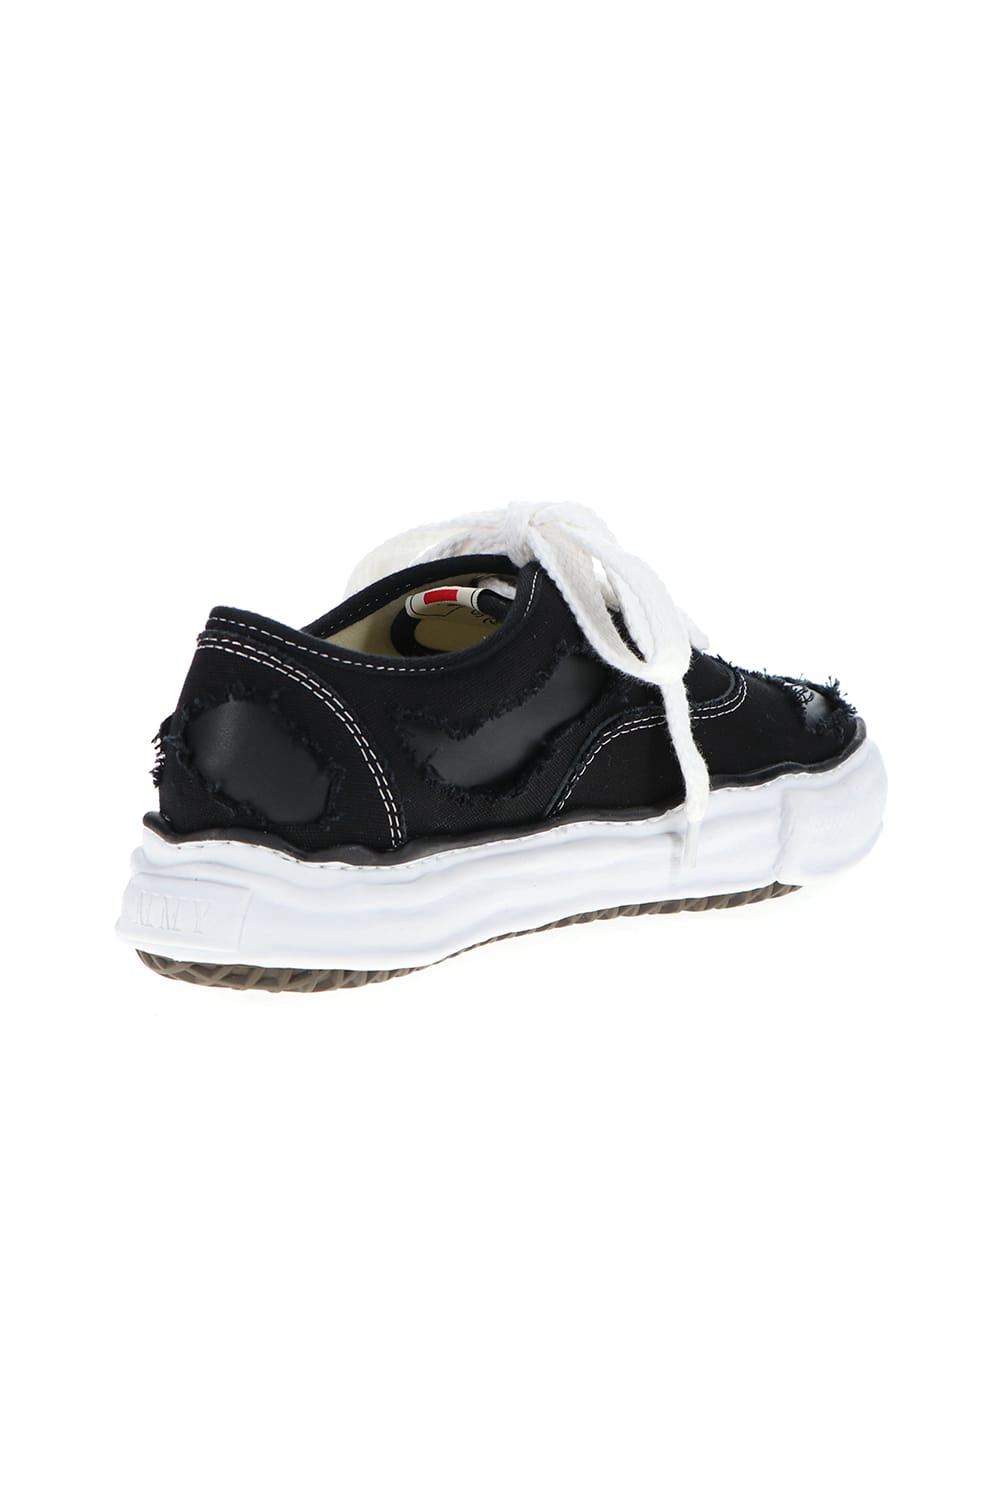 -BAKER- Original sole broken canvas Low-Top sneakers Black